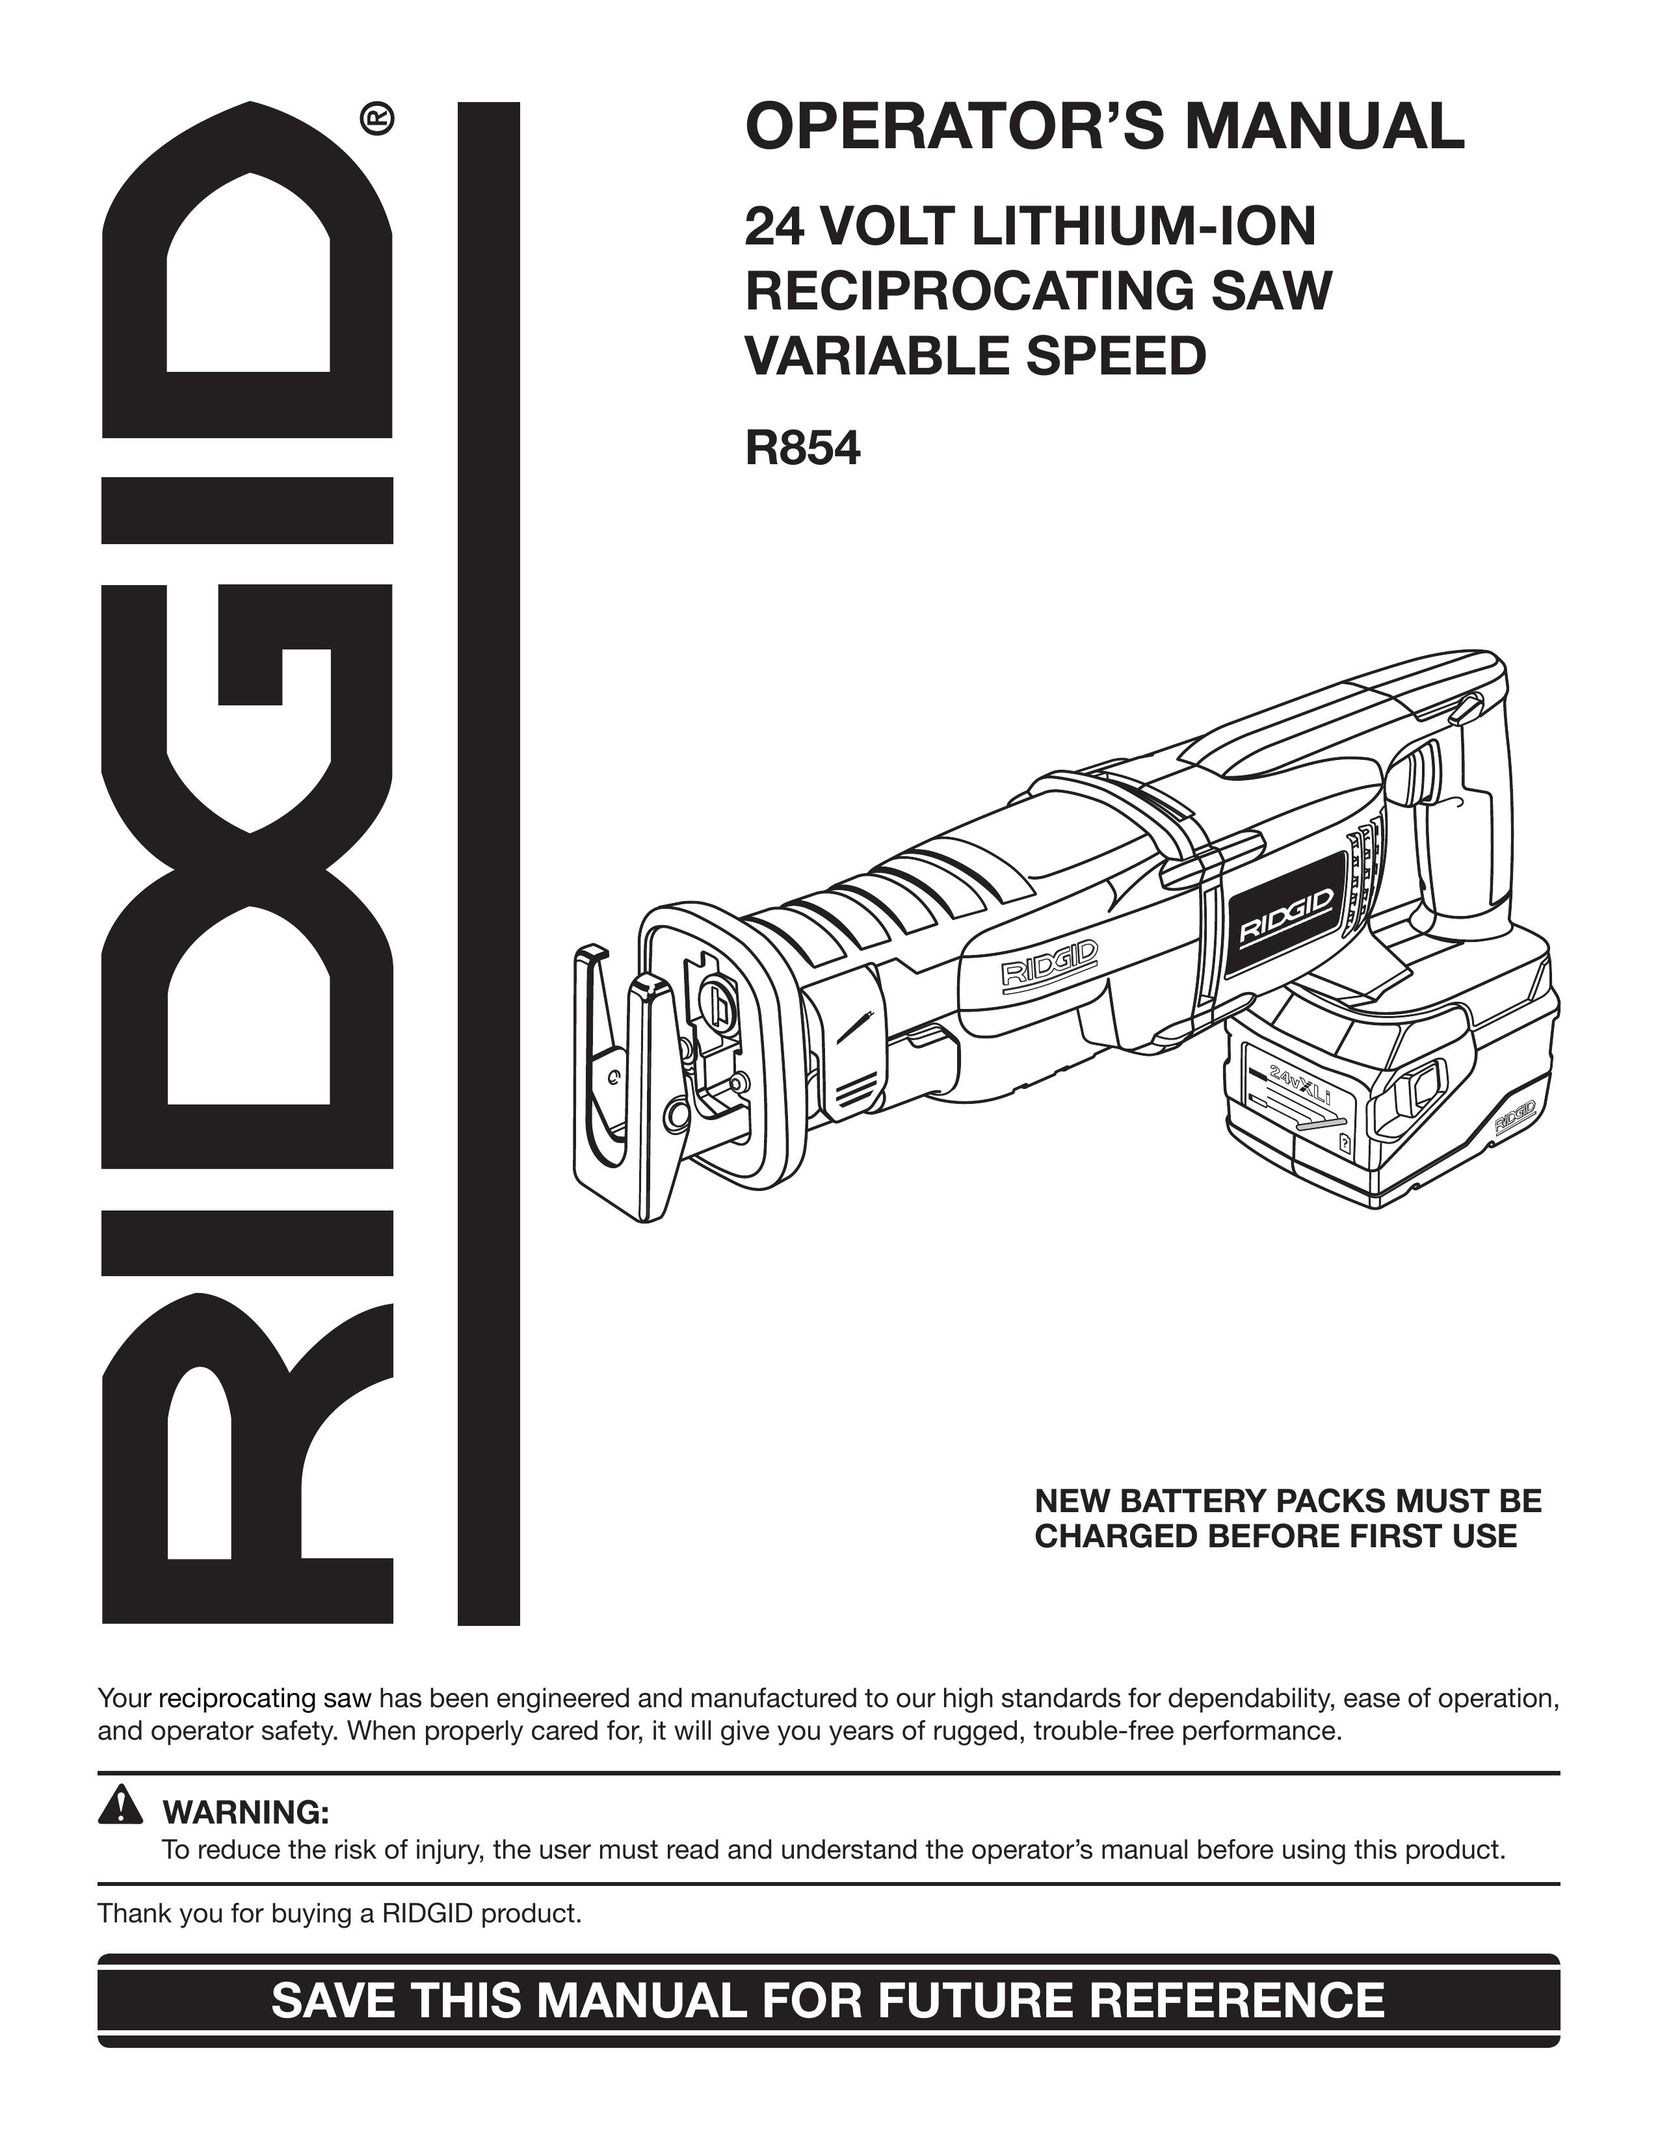 RIDGID R854 Cordless Saw User Manual